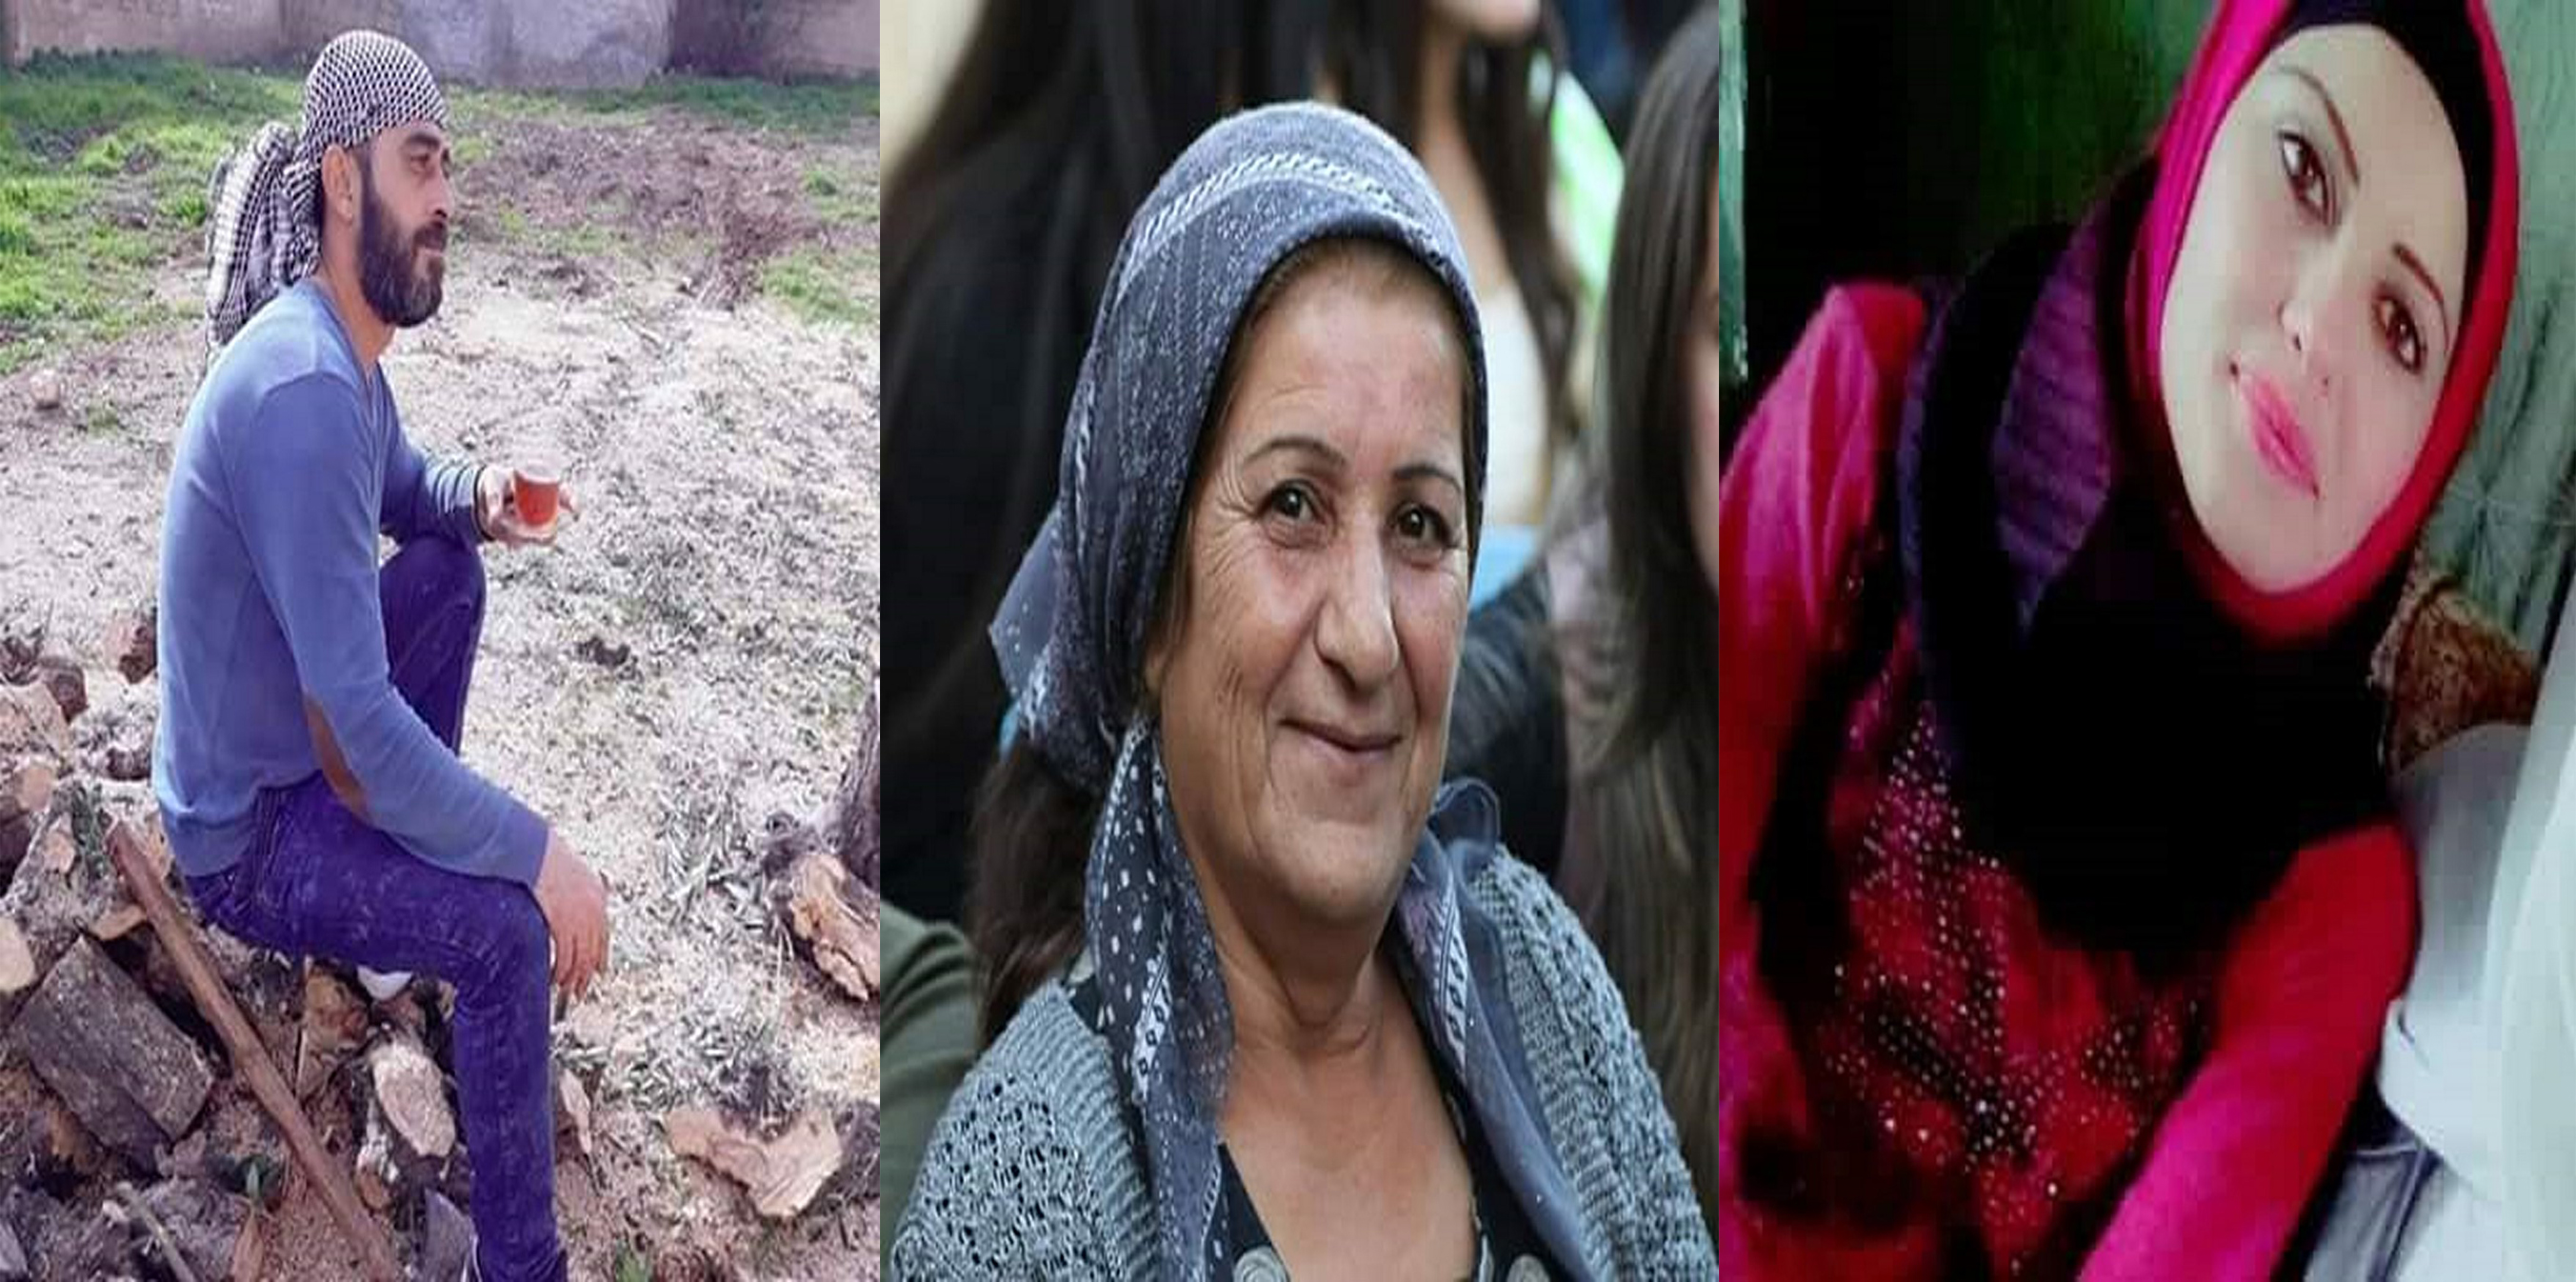 Turkey's mercenaries kidnapped 7 citizens from Kafar Safra village